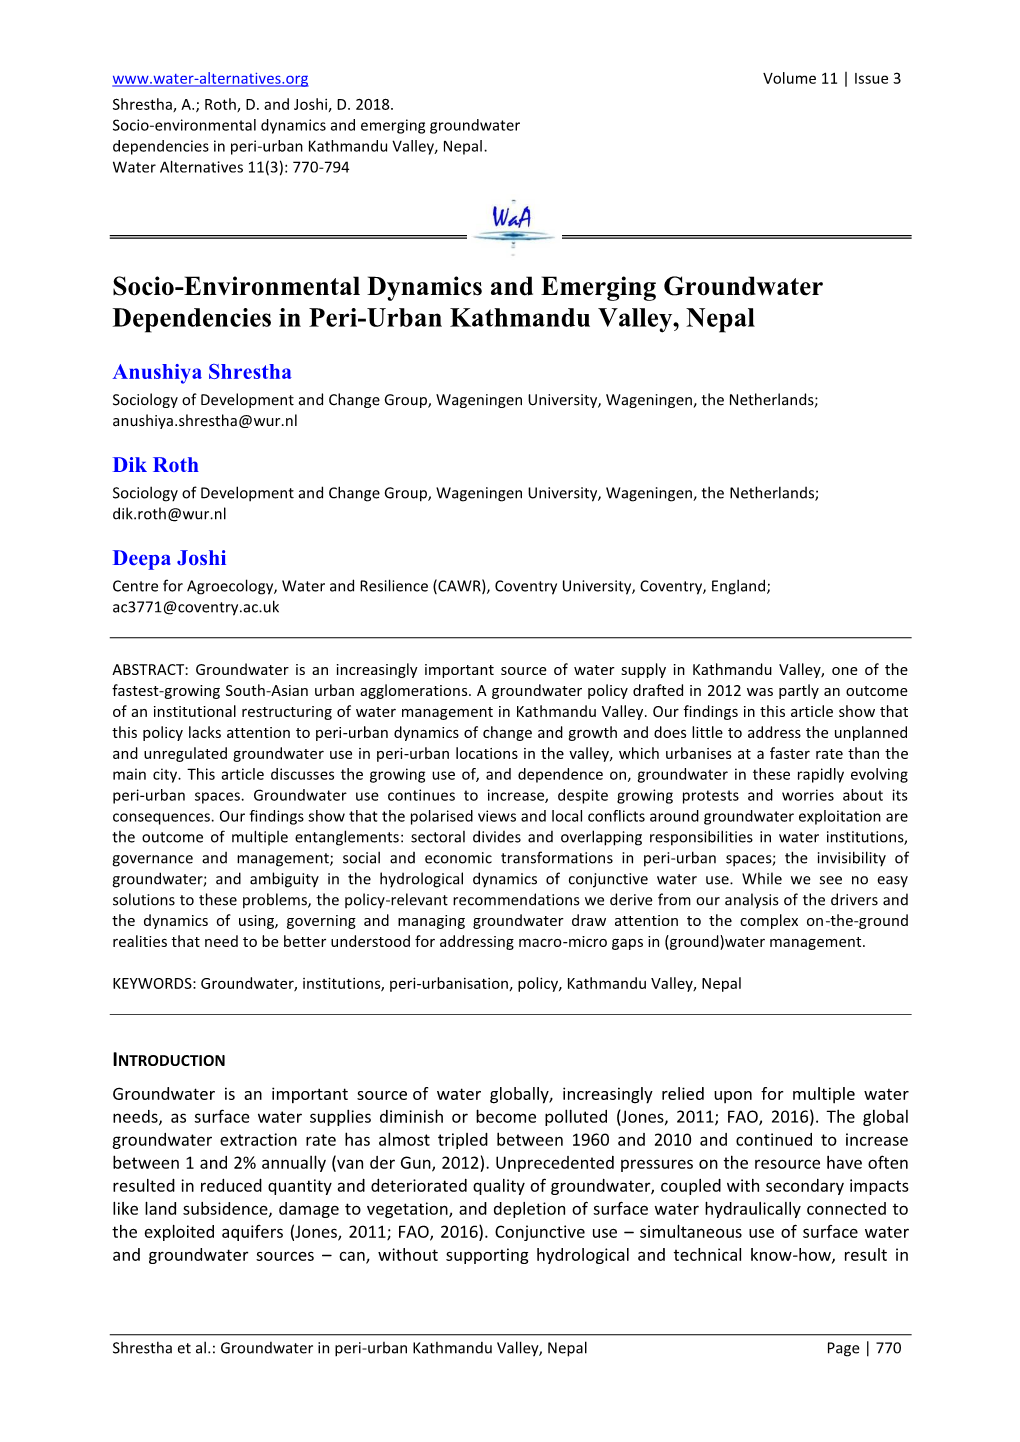 Socio-Environmental Dynamics and Emerging Groundwater Dependencies in Peri-Urban Kathmandu Valley, Nepal